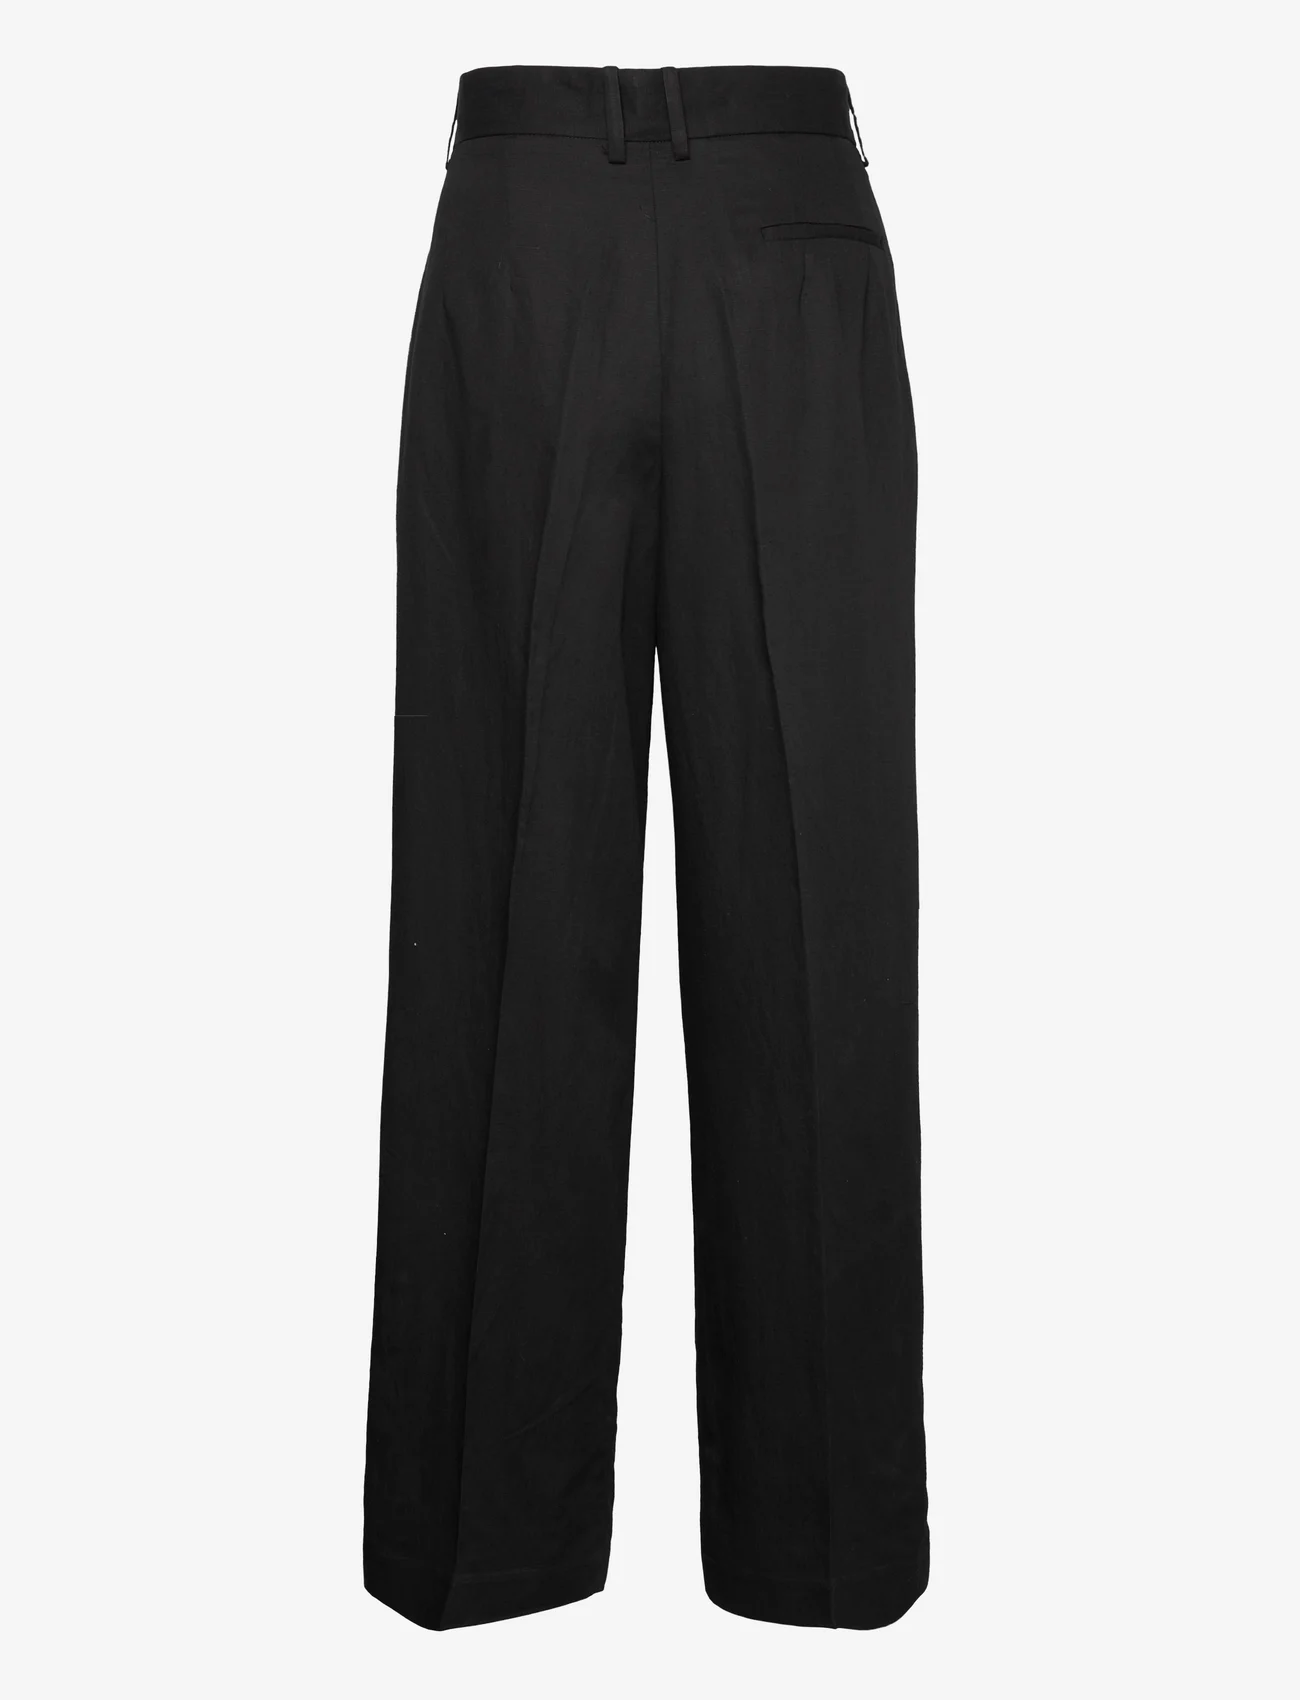 Mango - Wideleg pleated trousers - kostymbyxor - black - 1